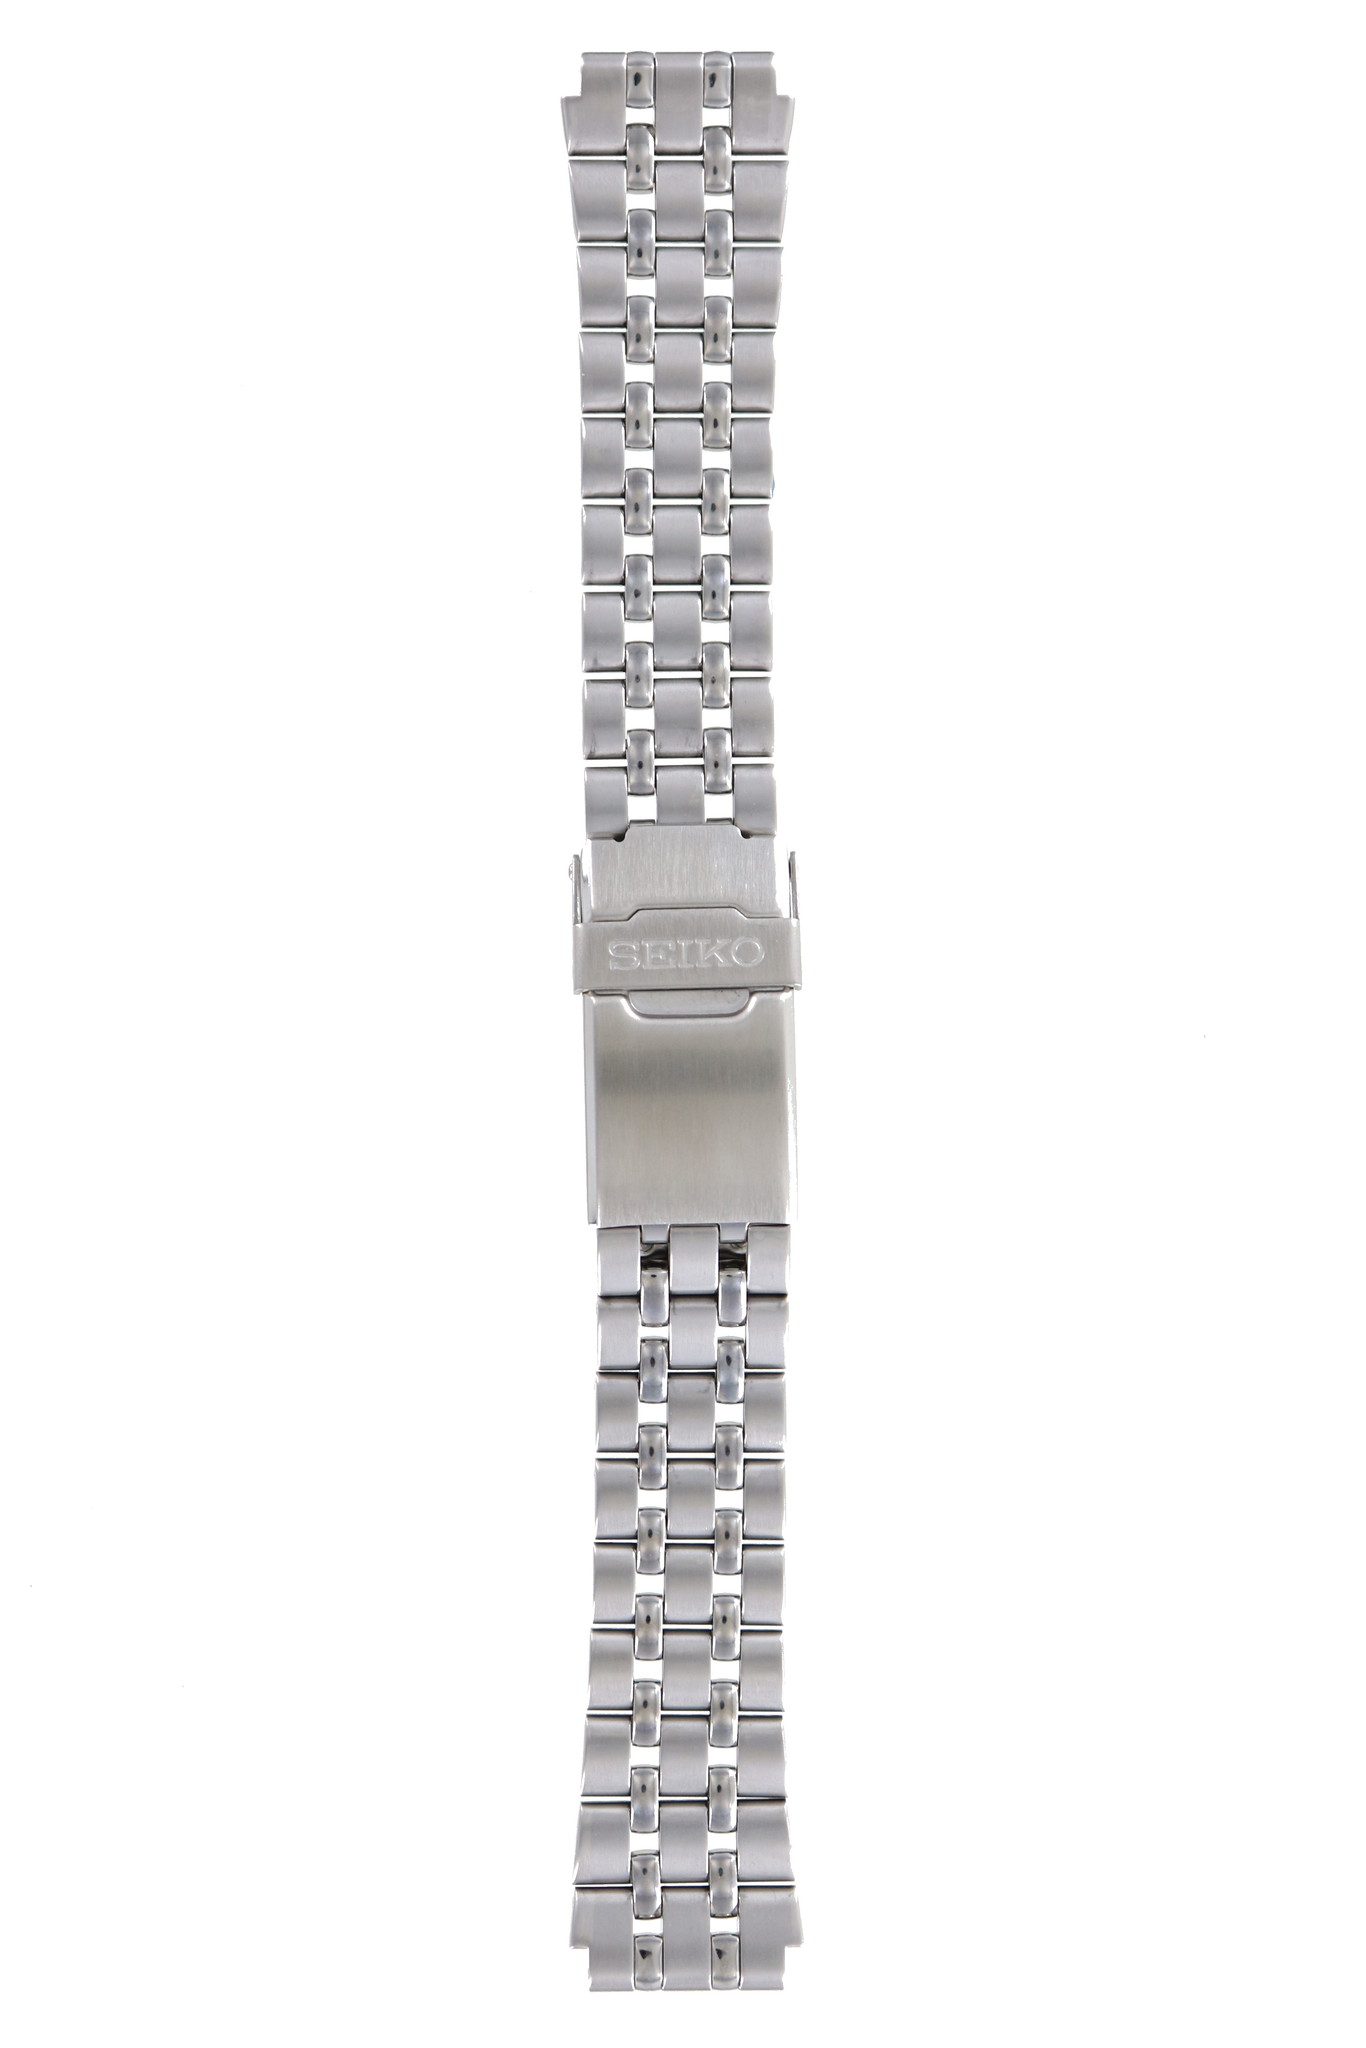 Seiko 4419-B.I - 7N42-5000 / 7T32-5A10 Watch Band Grey